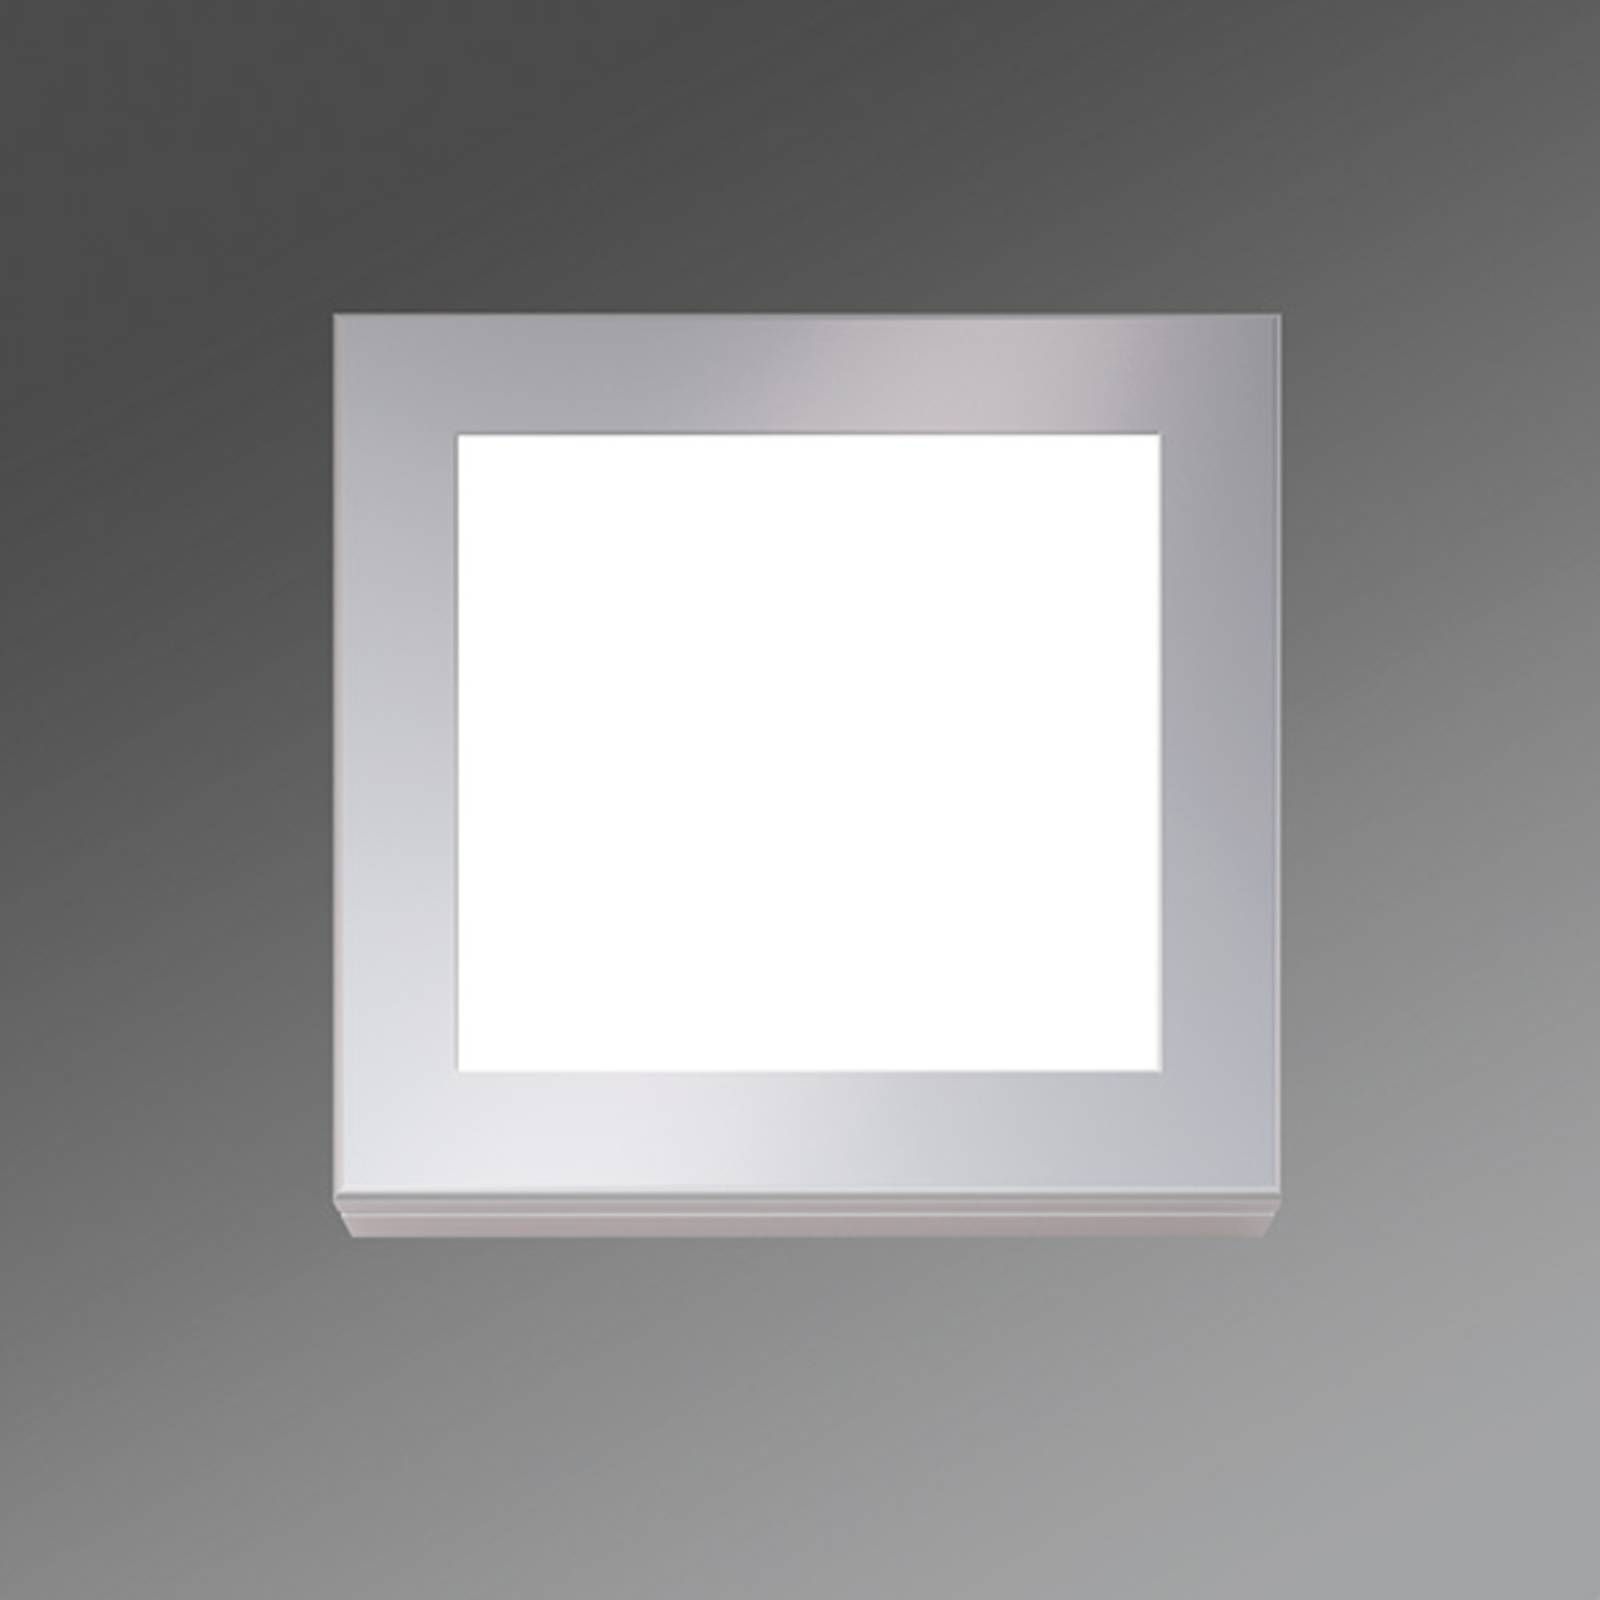 Regiolux Pravouhlé nástenné LED svietidlo Visula-VSWIG 12 W, Chodba, hliník, plast, 12W, L: 35.5 cm, K: 33cm